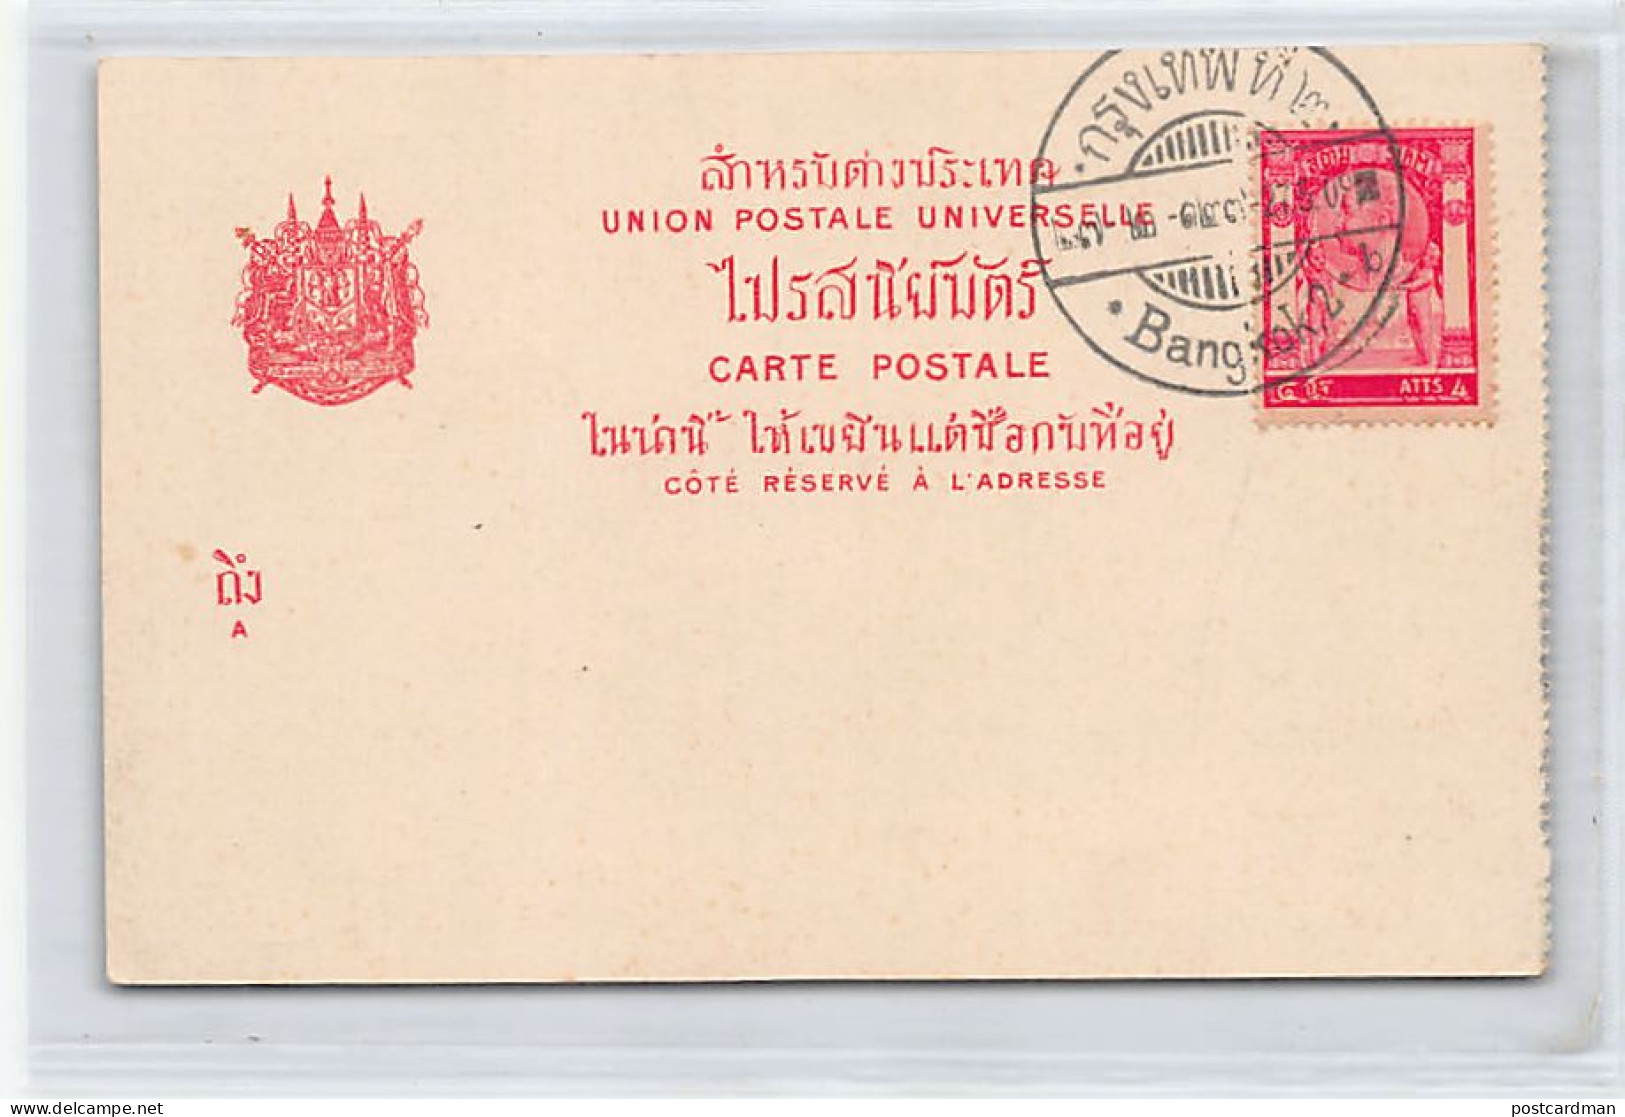 Thailand - BANGKOK - Royal Palace - Publ. J. Antonio  - Thaïland